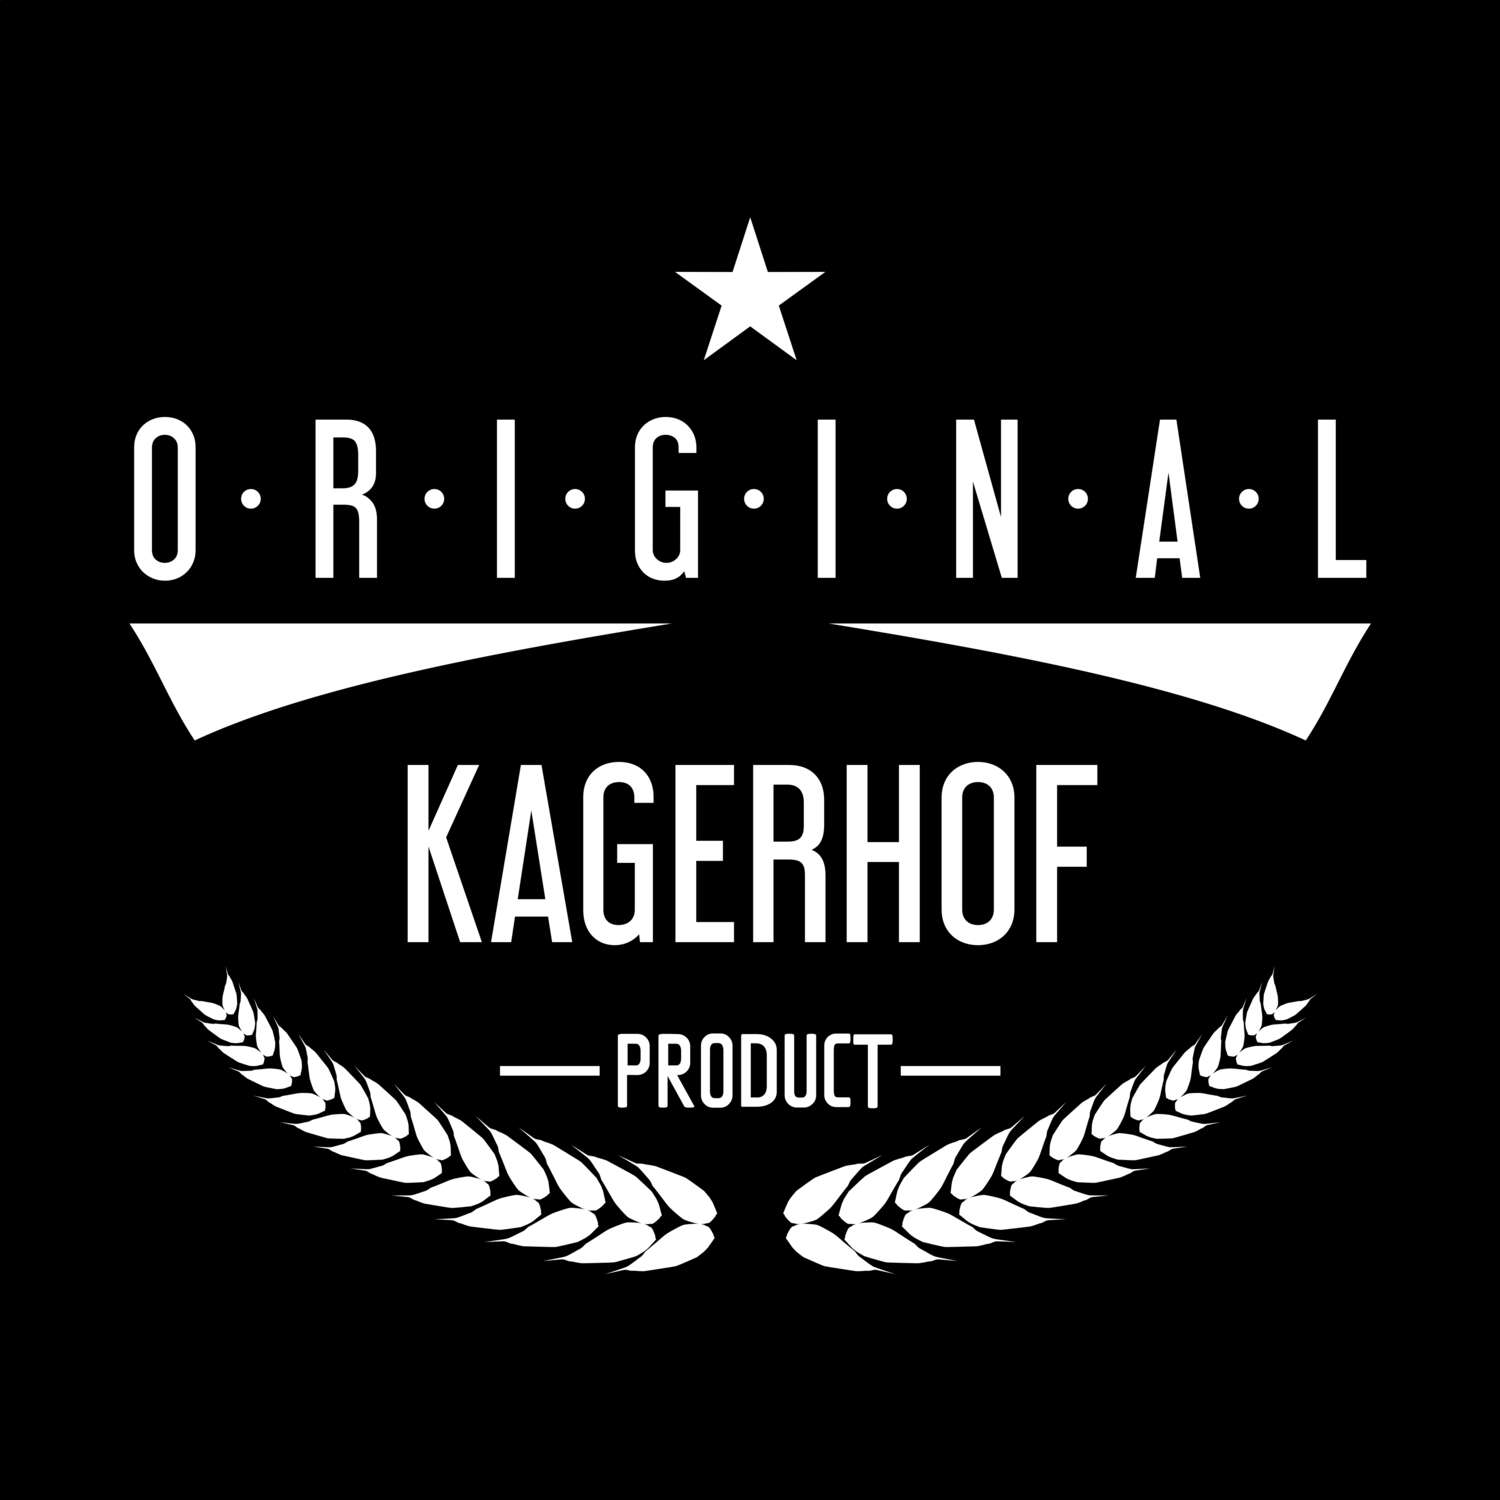 Kagerhof T-Shirt »Original Product«